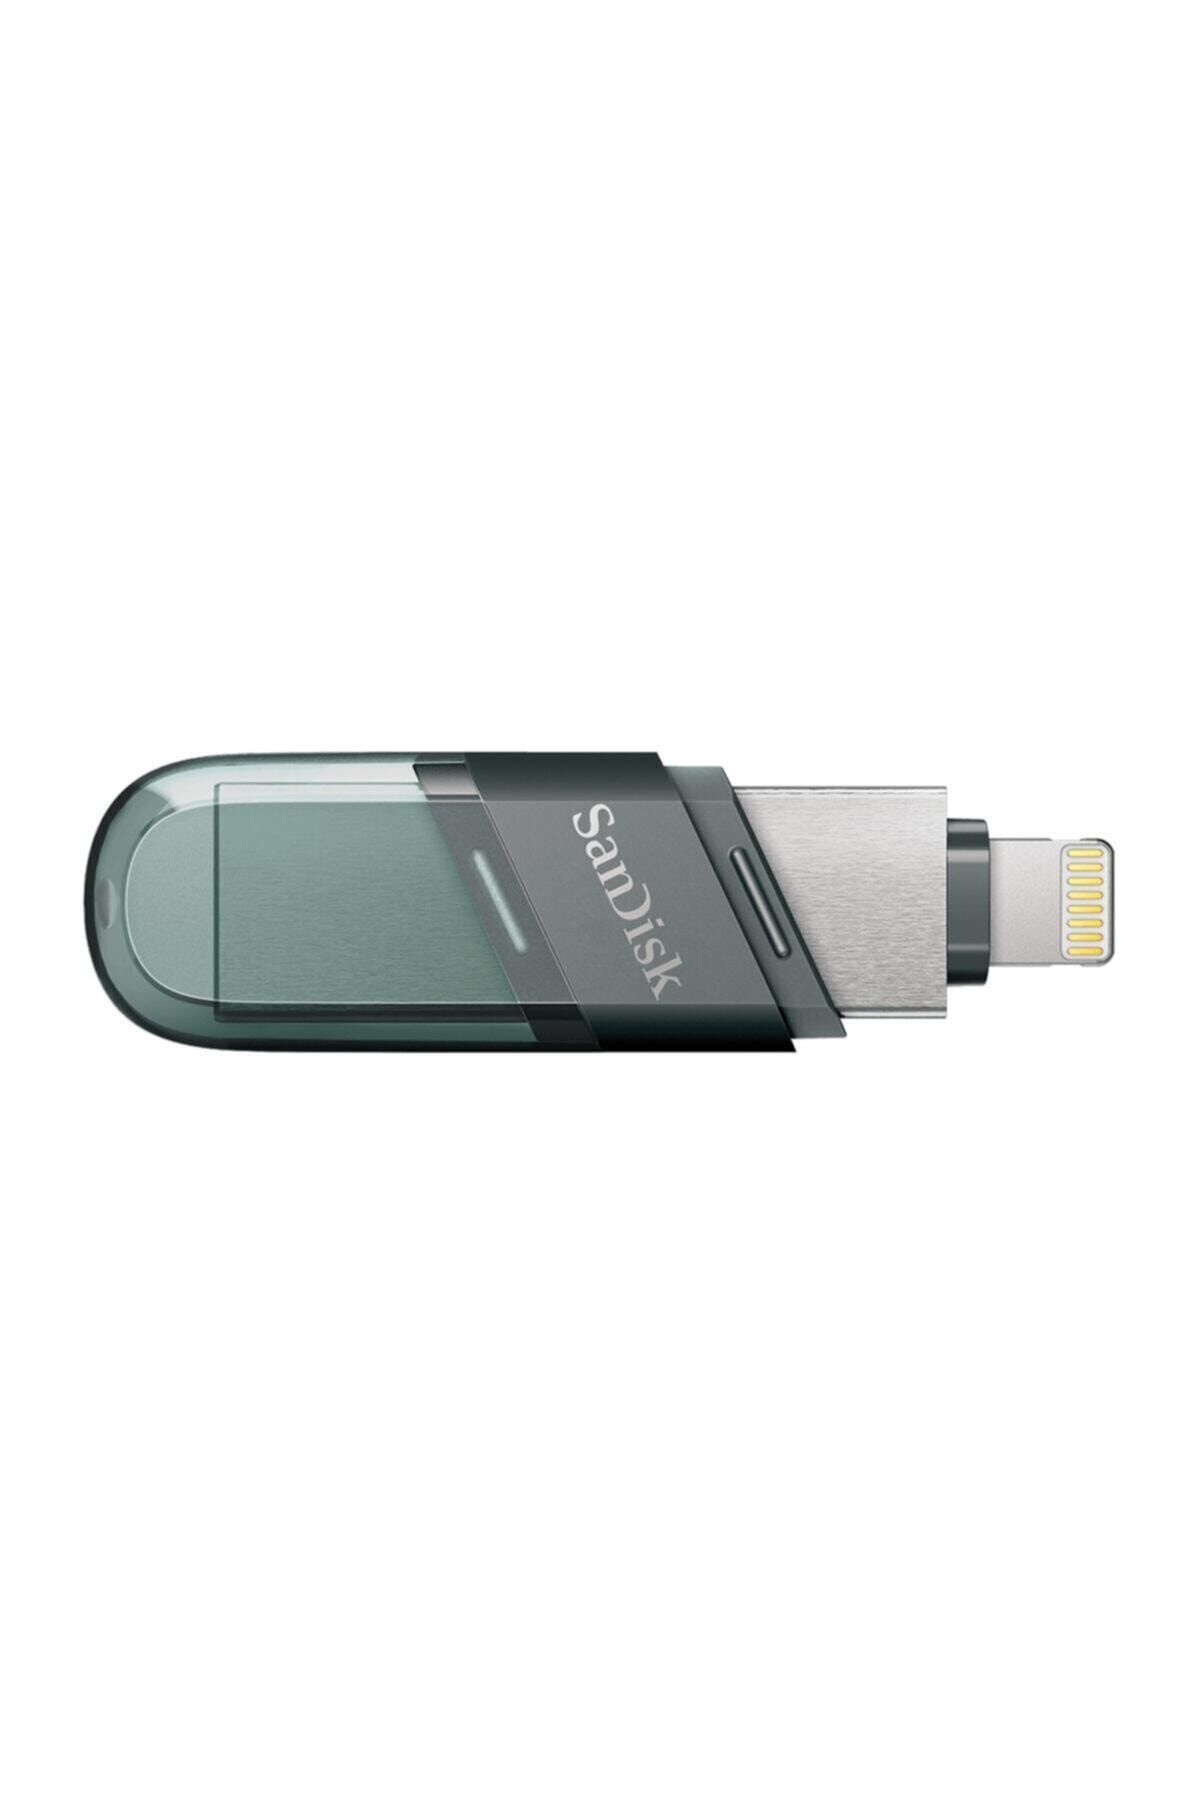 Sandisk iXpand 128GB Flash Drive Flip IOS USB 3.0